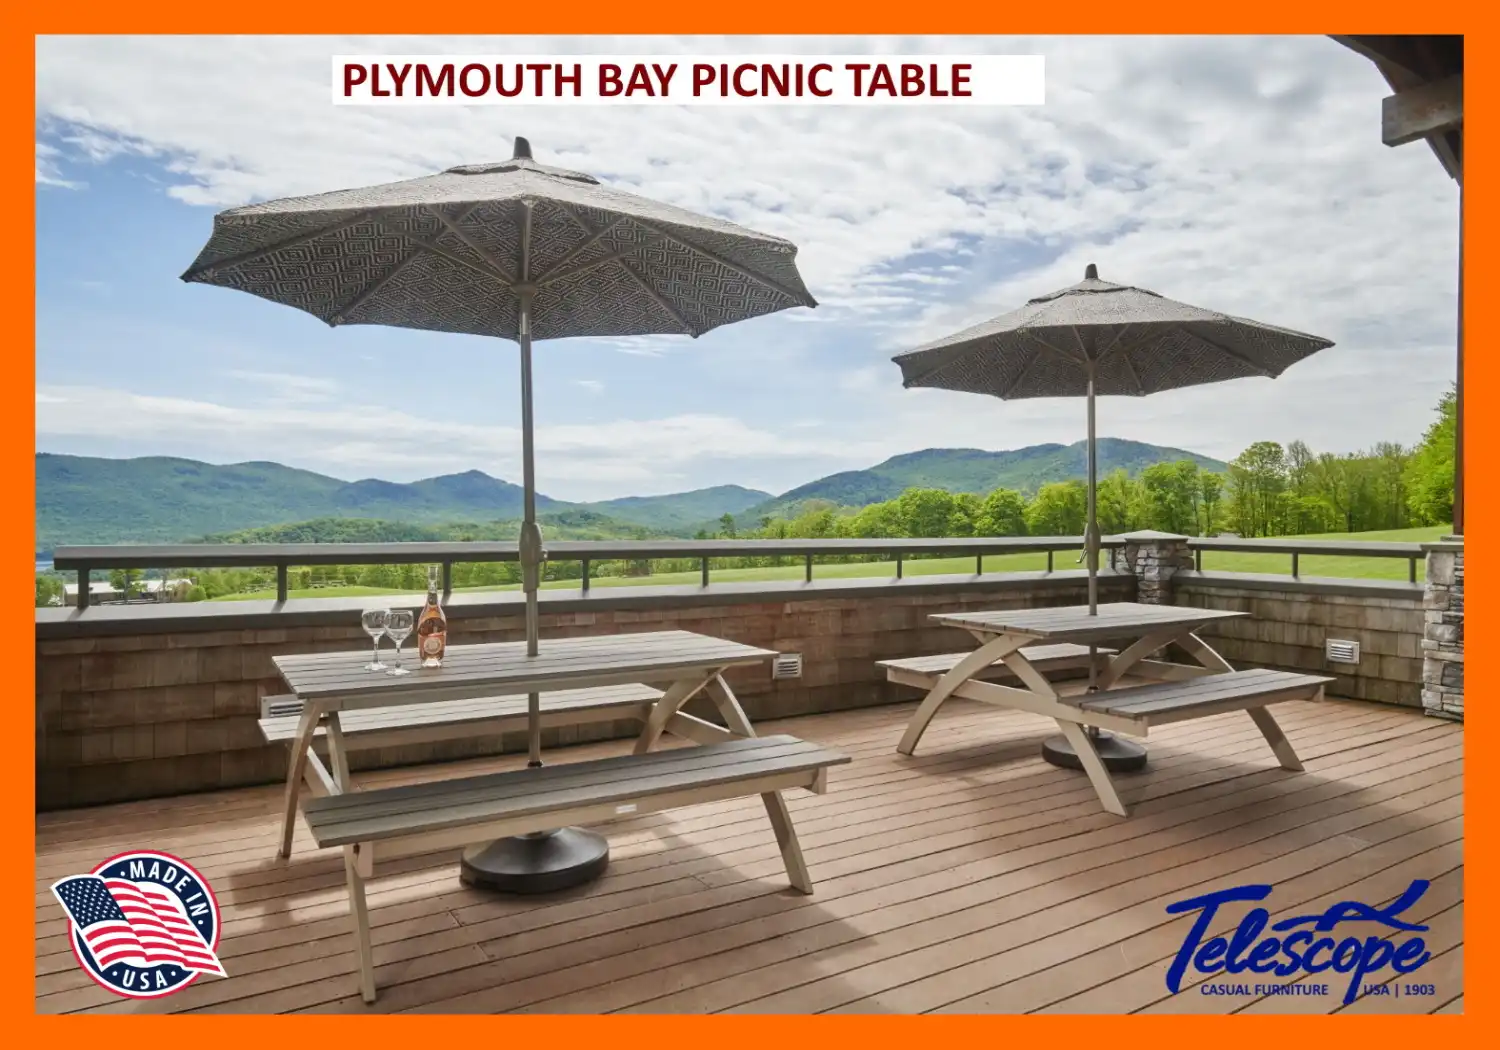 PLYMOUTH BAY PICNIC TABLE